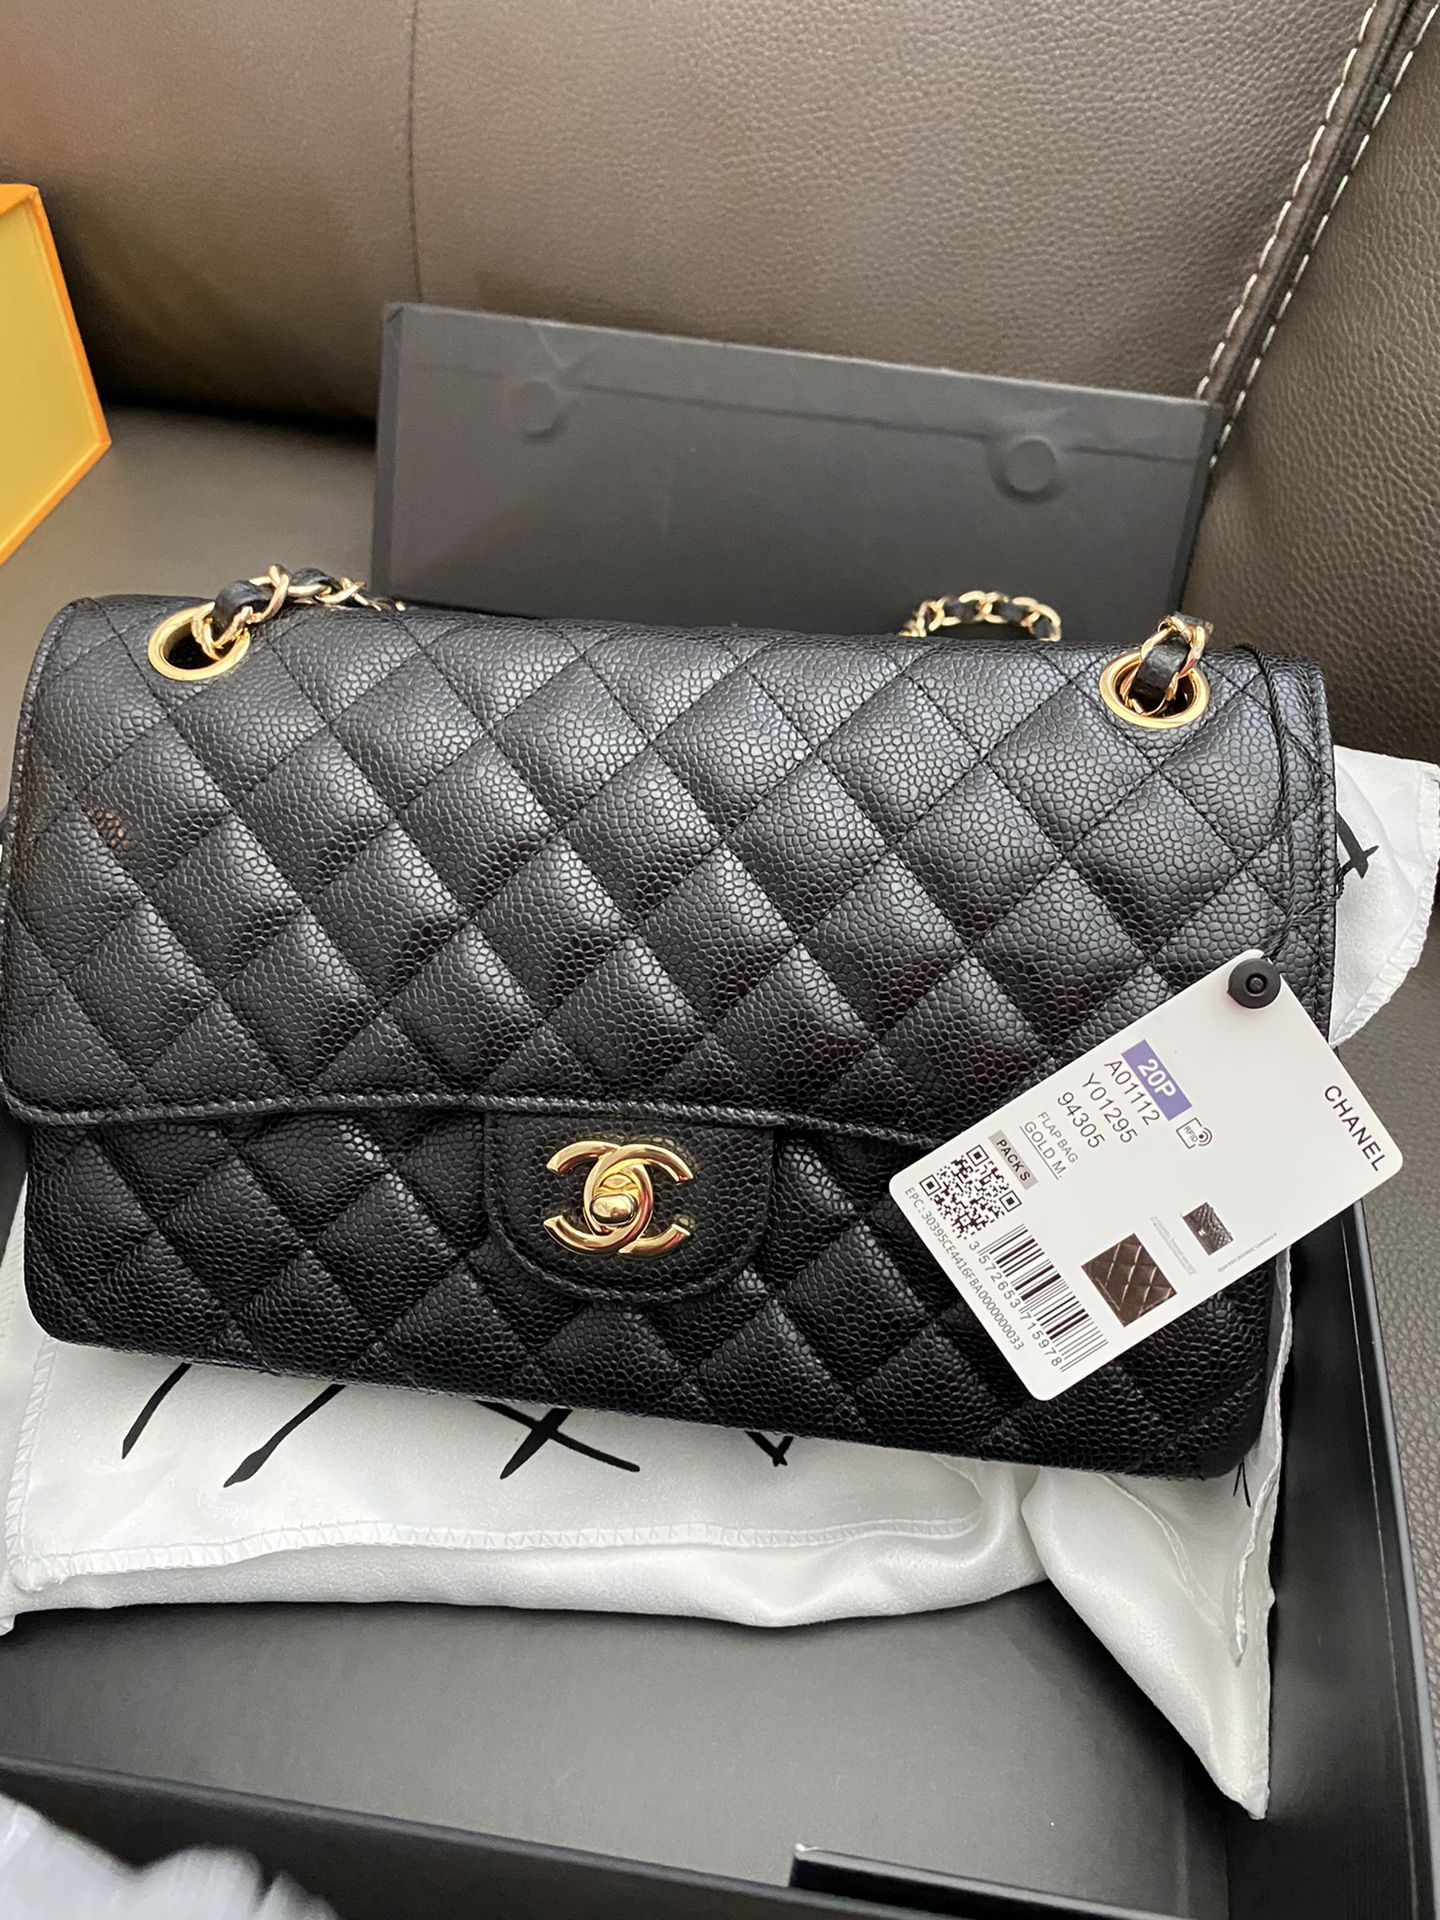 Chanel medium size leather purse $500